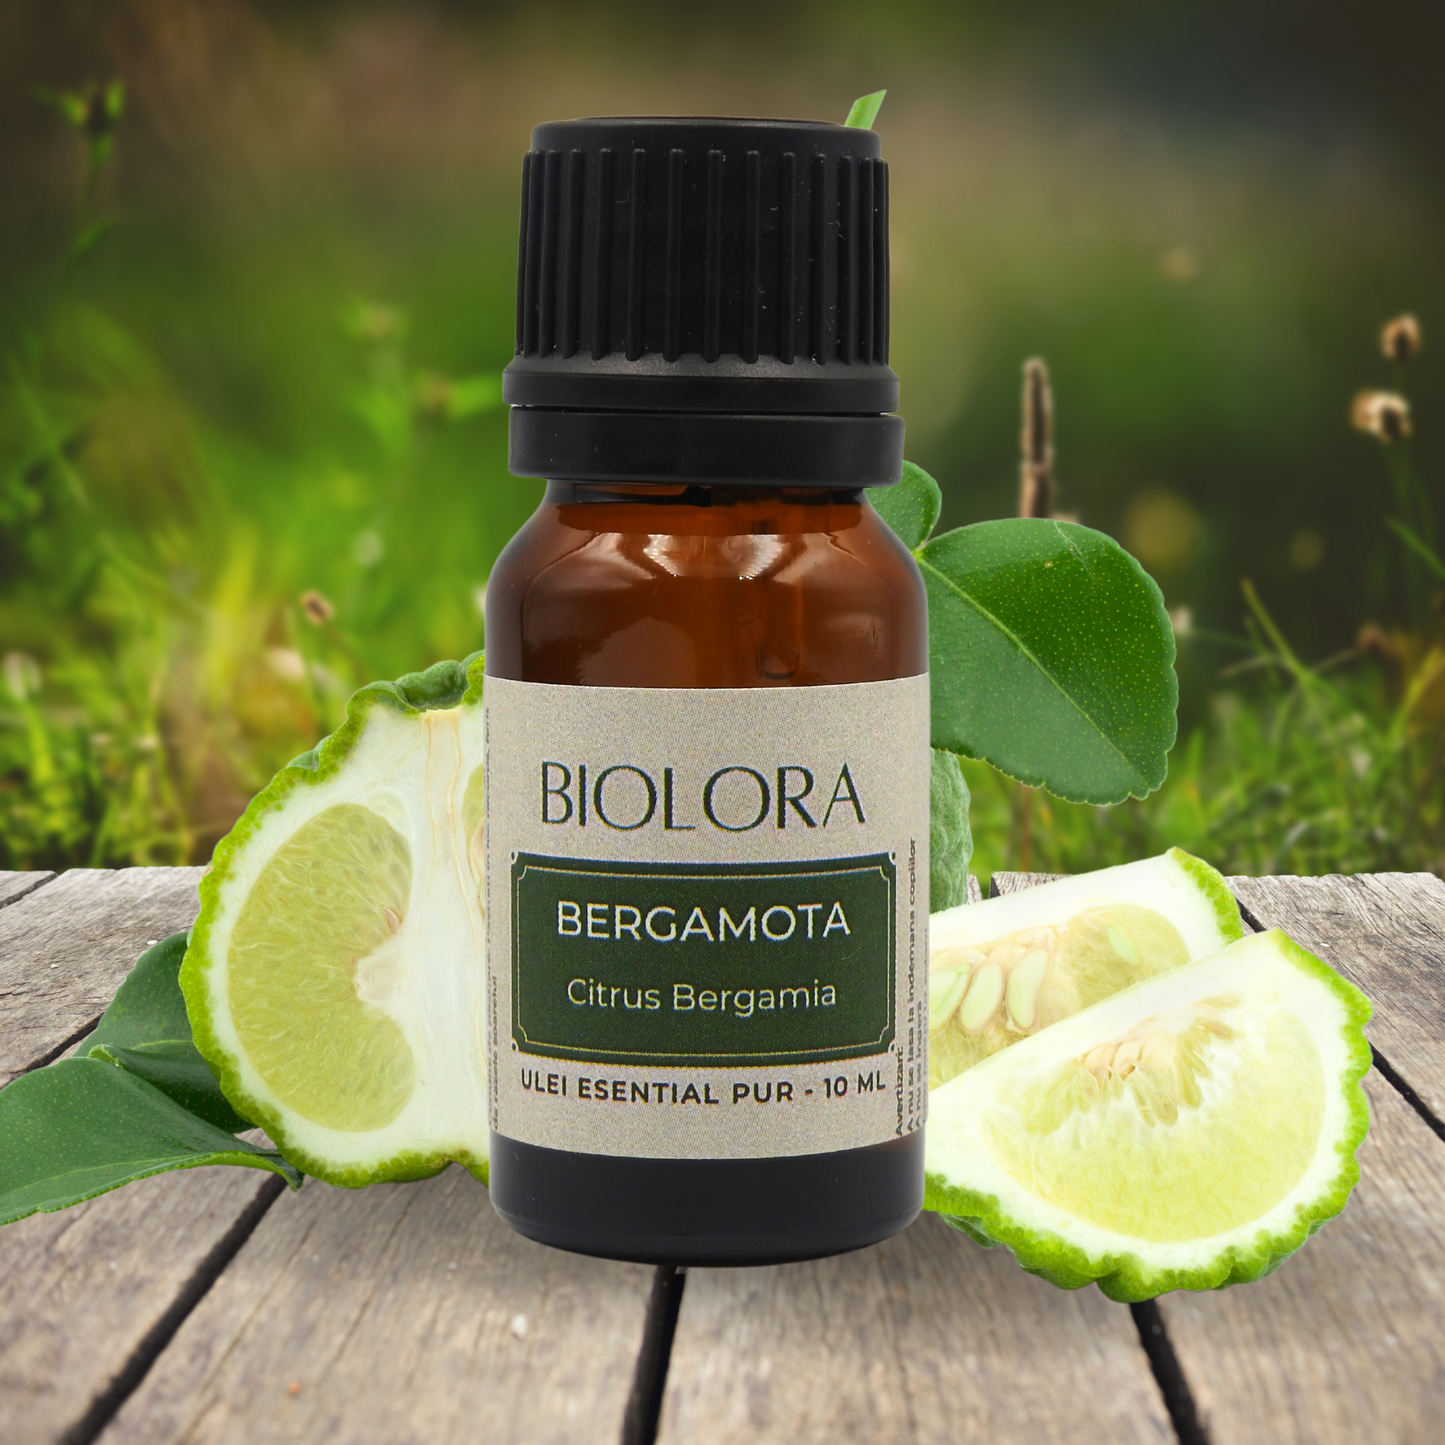 Ulei Esential de Bergamota Biolora, aromaterapie, puritate 100%, nediluat, 10 ml